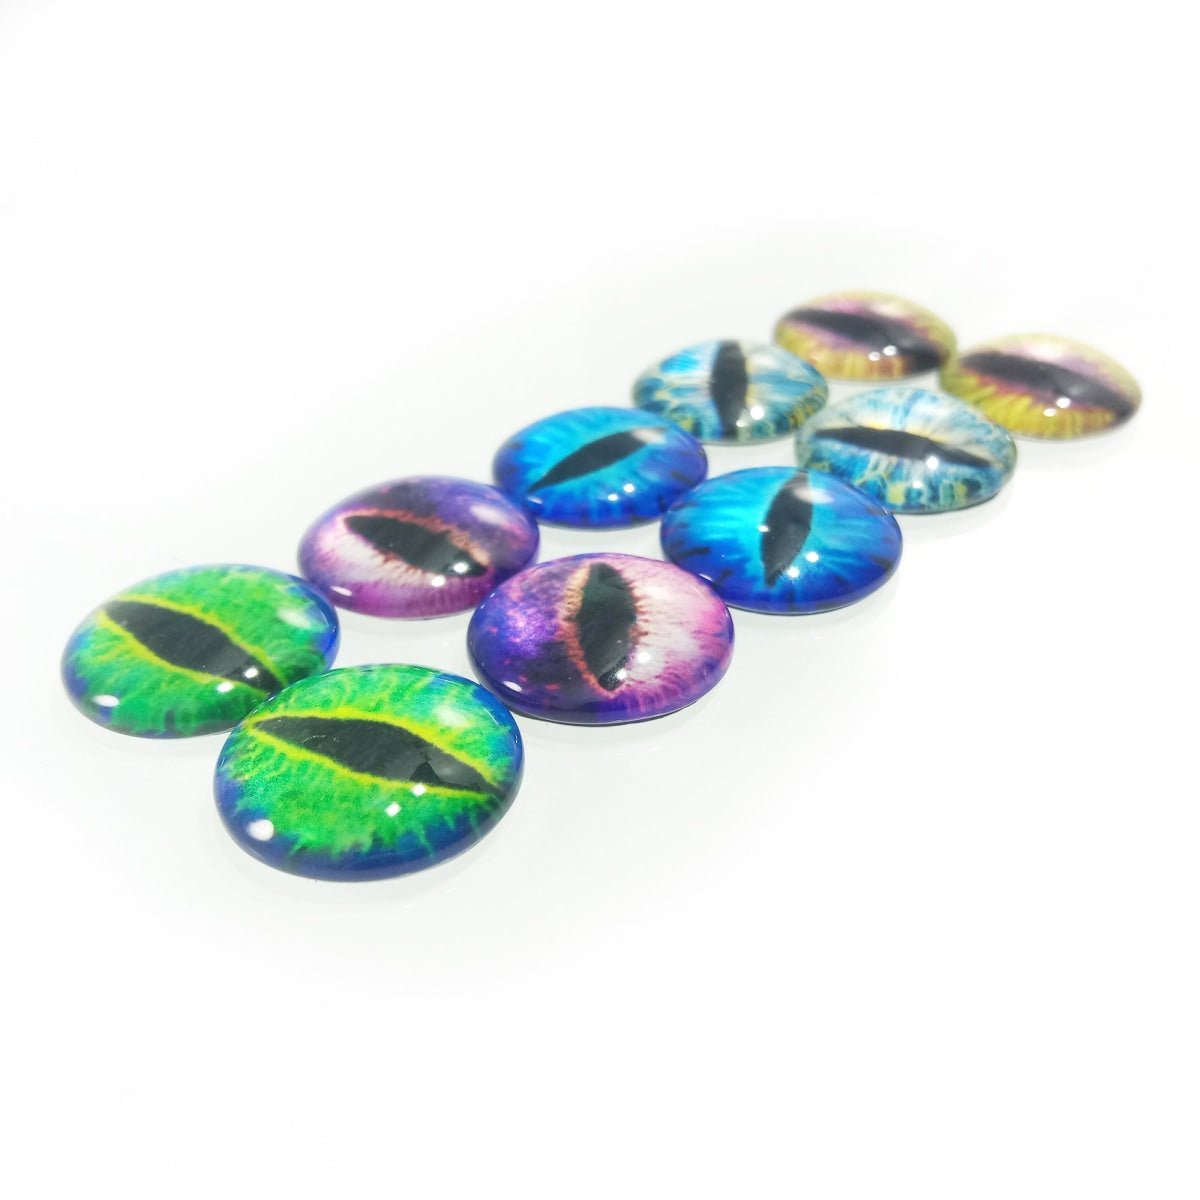 10pcs Round 18mm Glass Eyes Dragon Lizard Frog Eyeballs - Mixed Set 1 - - Asia Sell